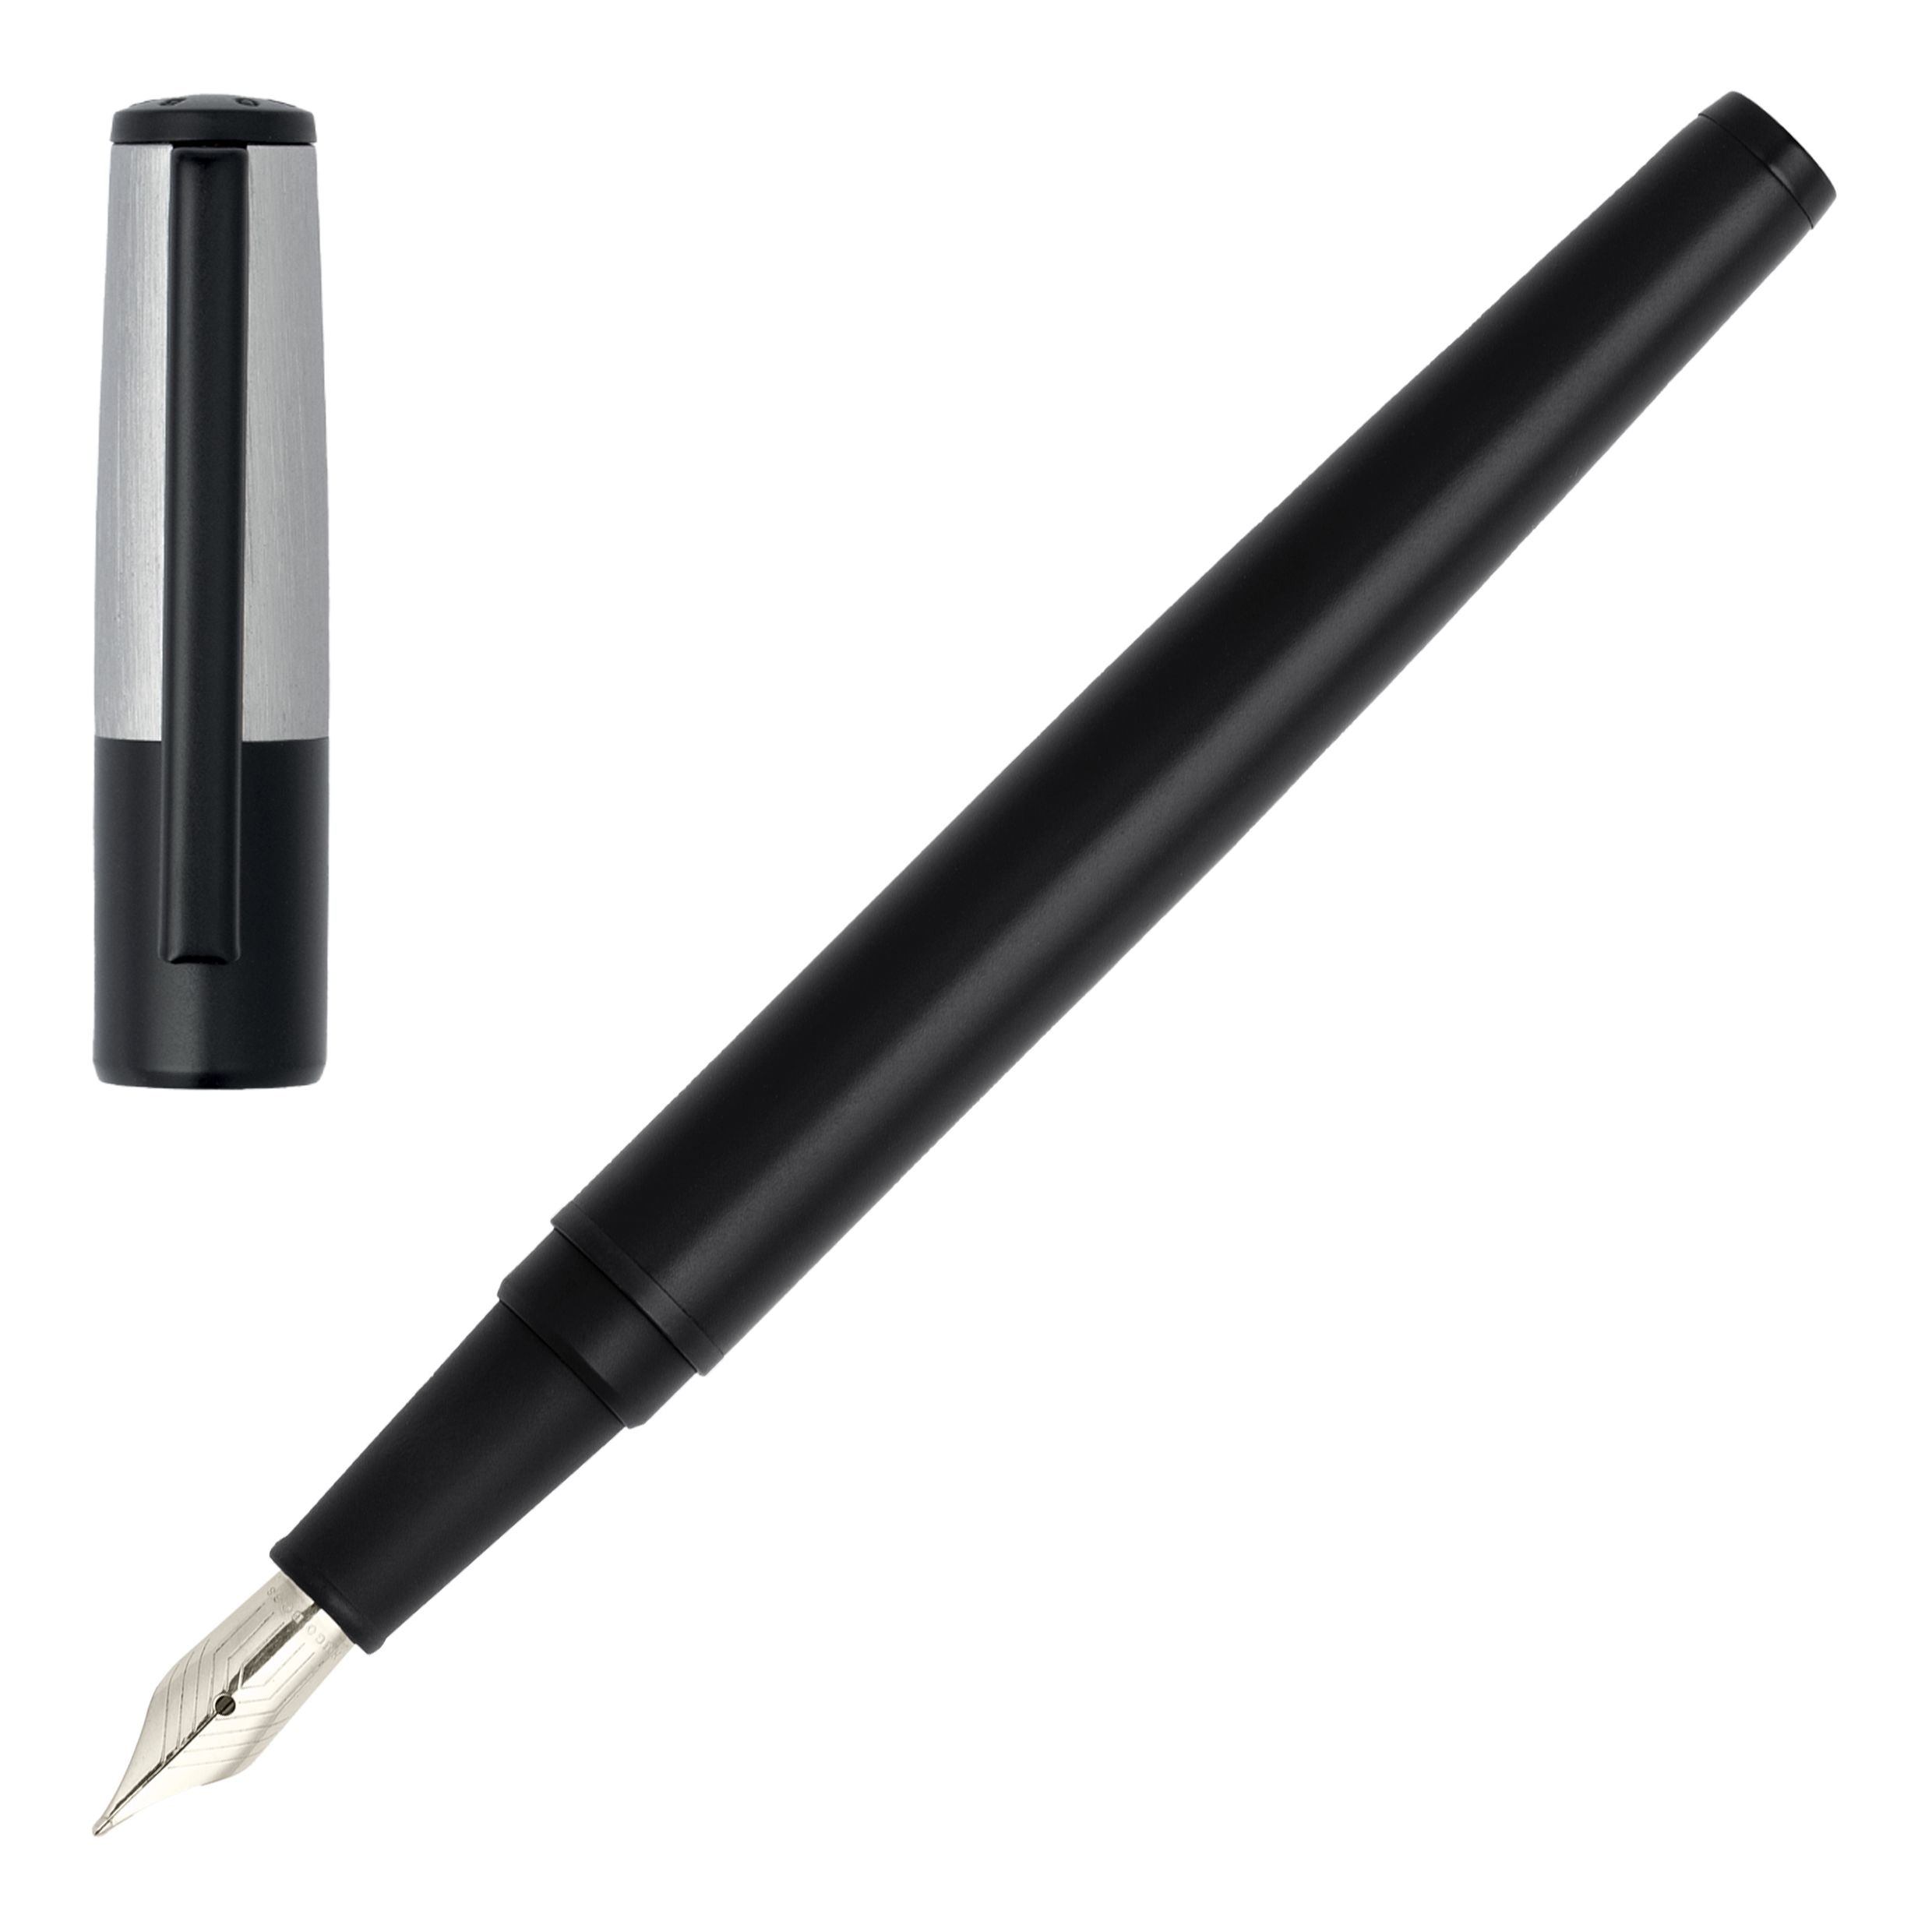 Hugo Boss fountain pen gear minimal black & chrome